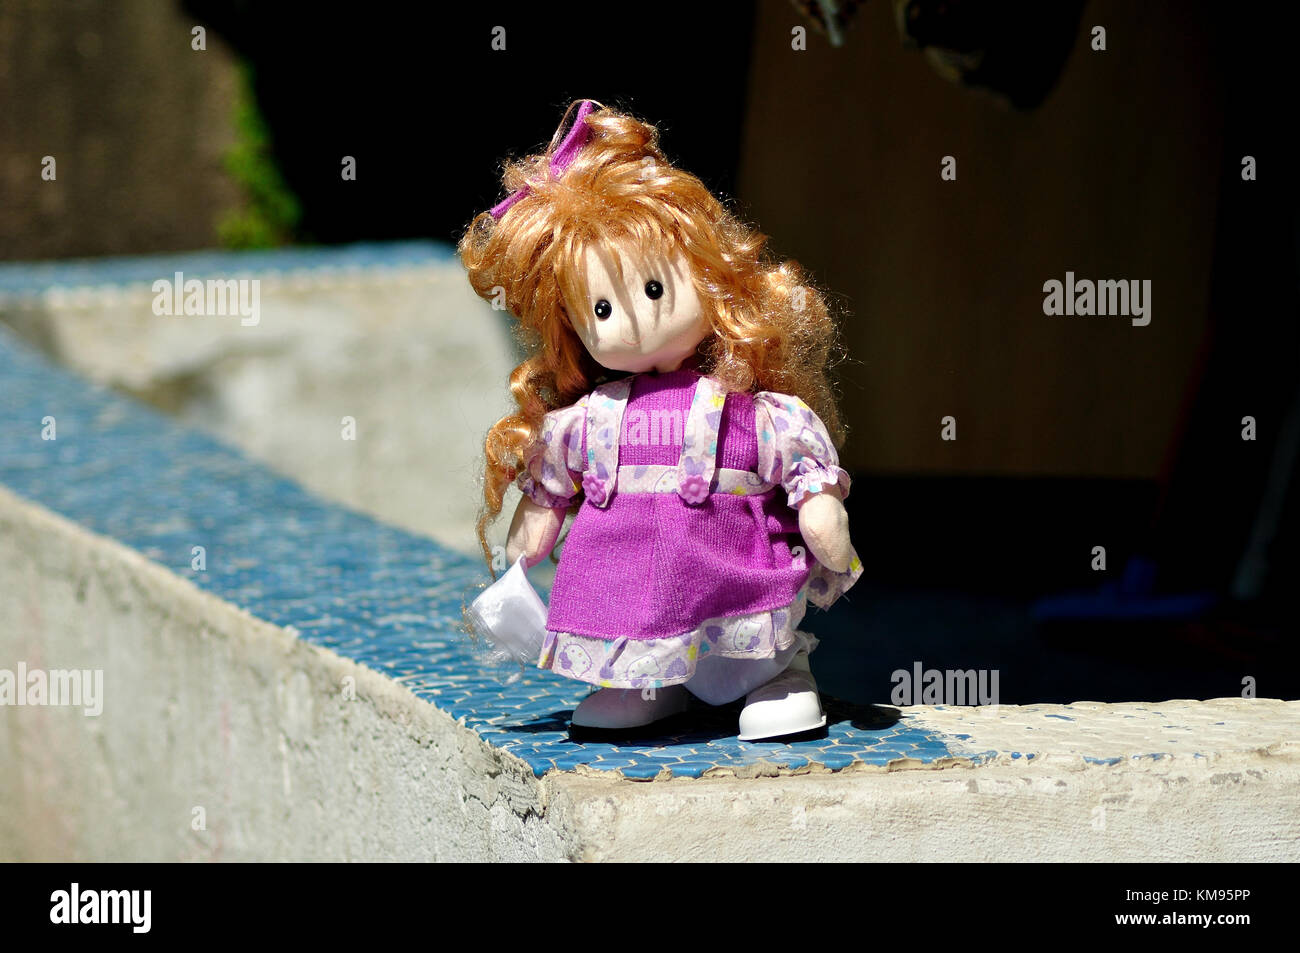 lovelorn toy girl Stock Photo